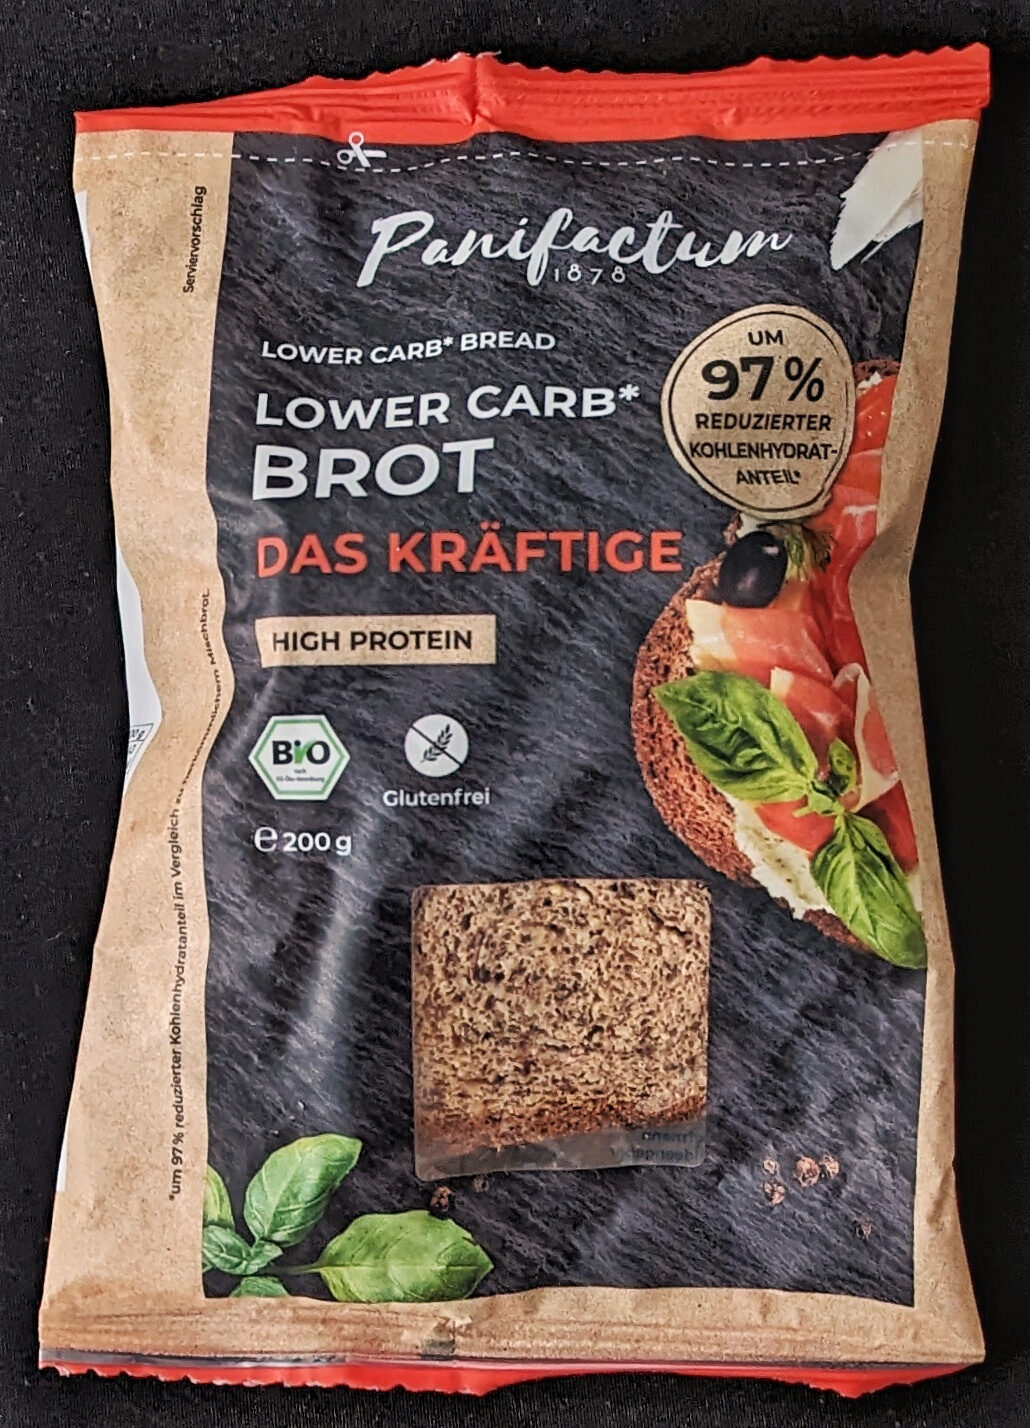 Lower Carb Brot, Das Kräftige - Product - de